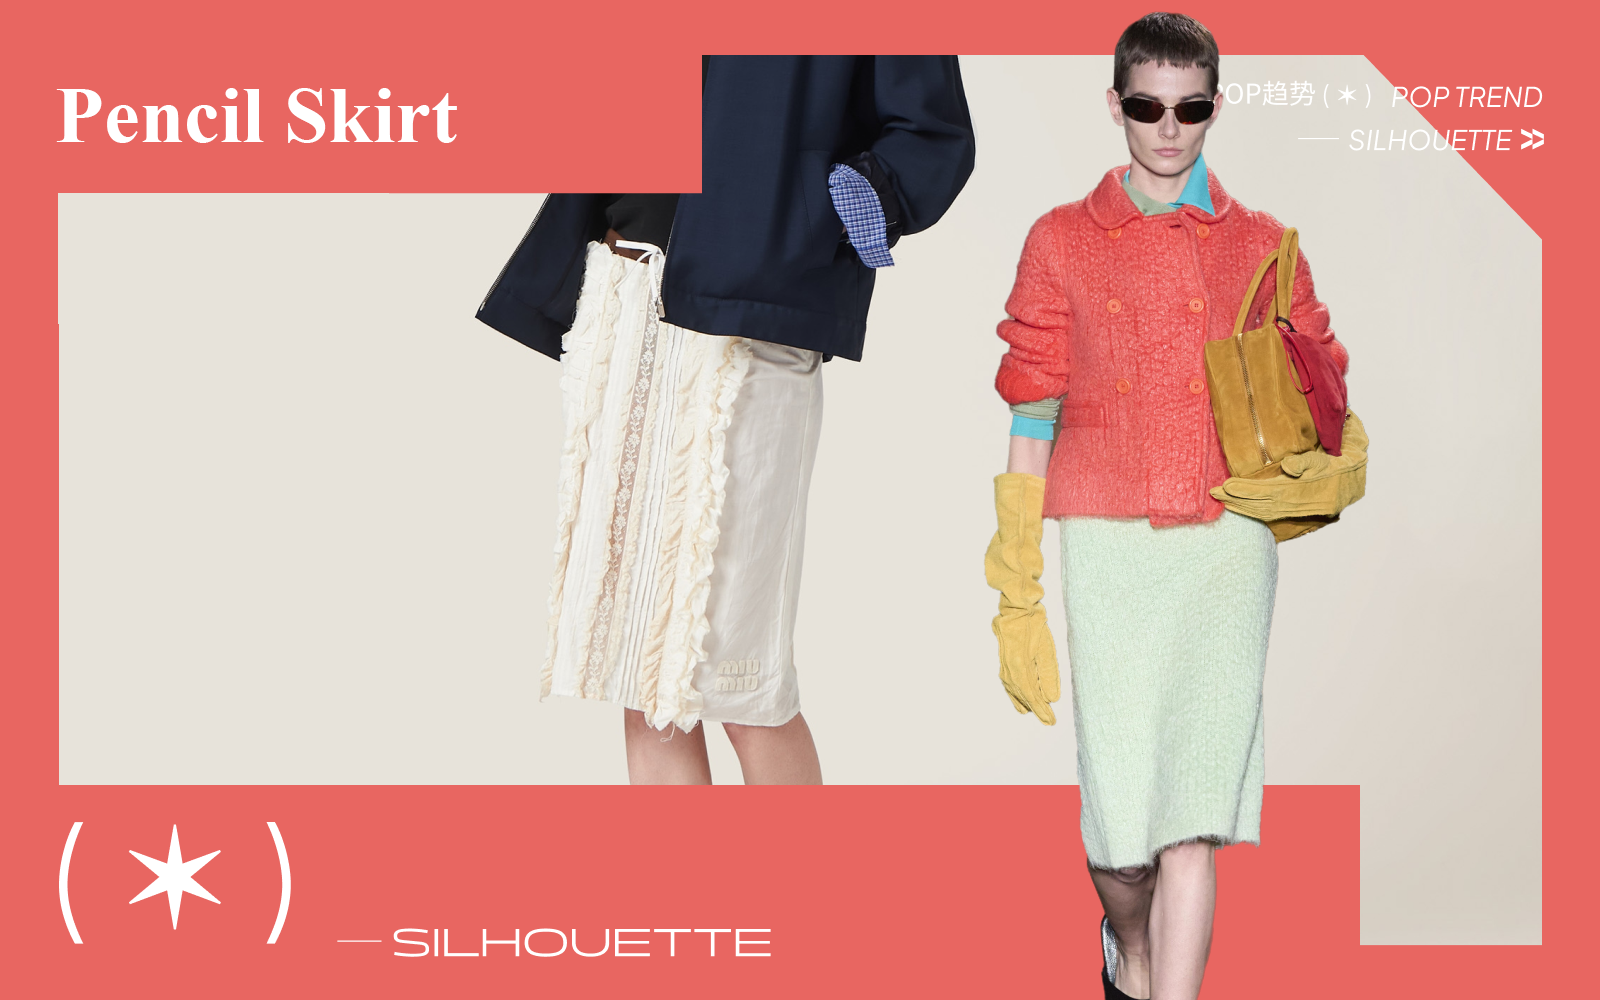 Elegant Commuting -- The Silhouette Trend for Women's Pencil Skirt